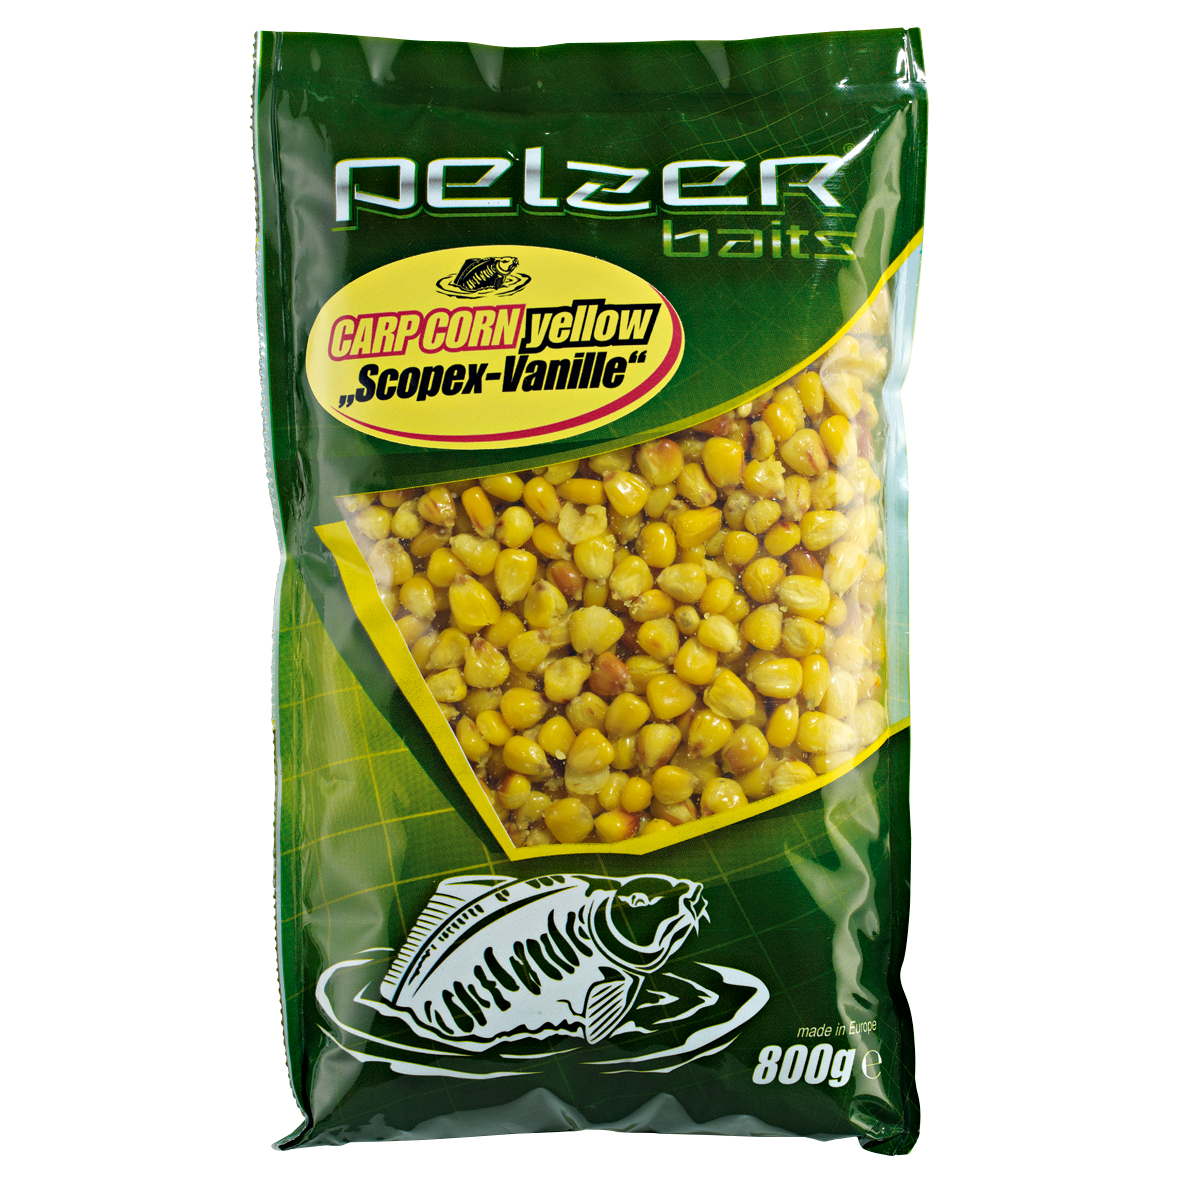 Pelzer Particle Baits Carp Corn Angel Corn (Scopex/Vanilla) at low